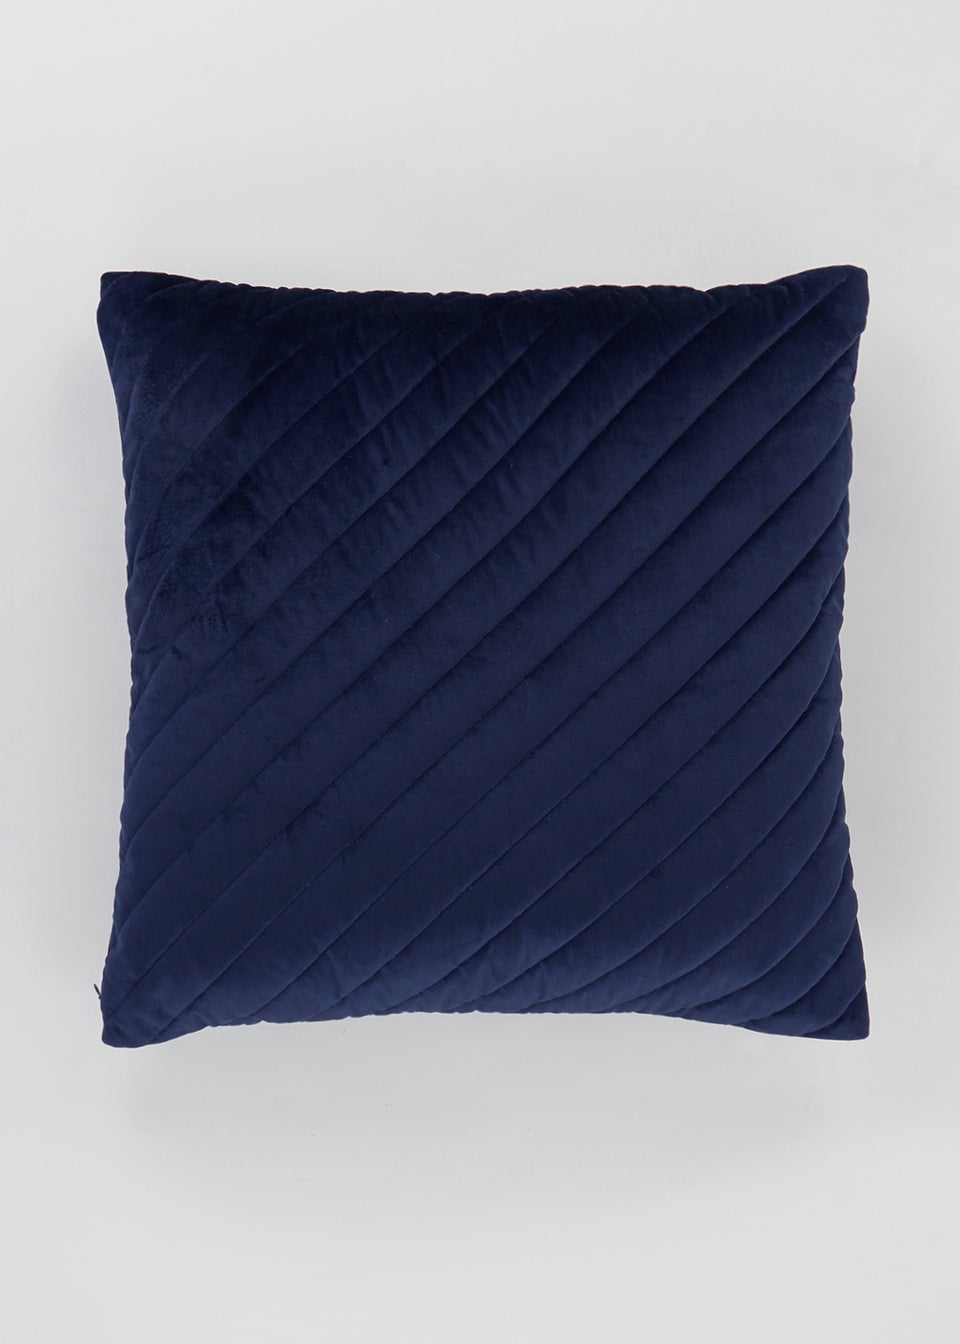 Farhi by Nicole Farhi Oversized Velvet Cushion (58cm x 58cm)